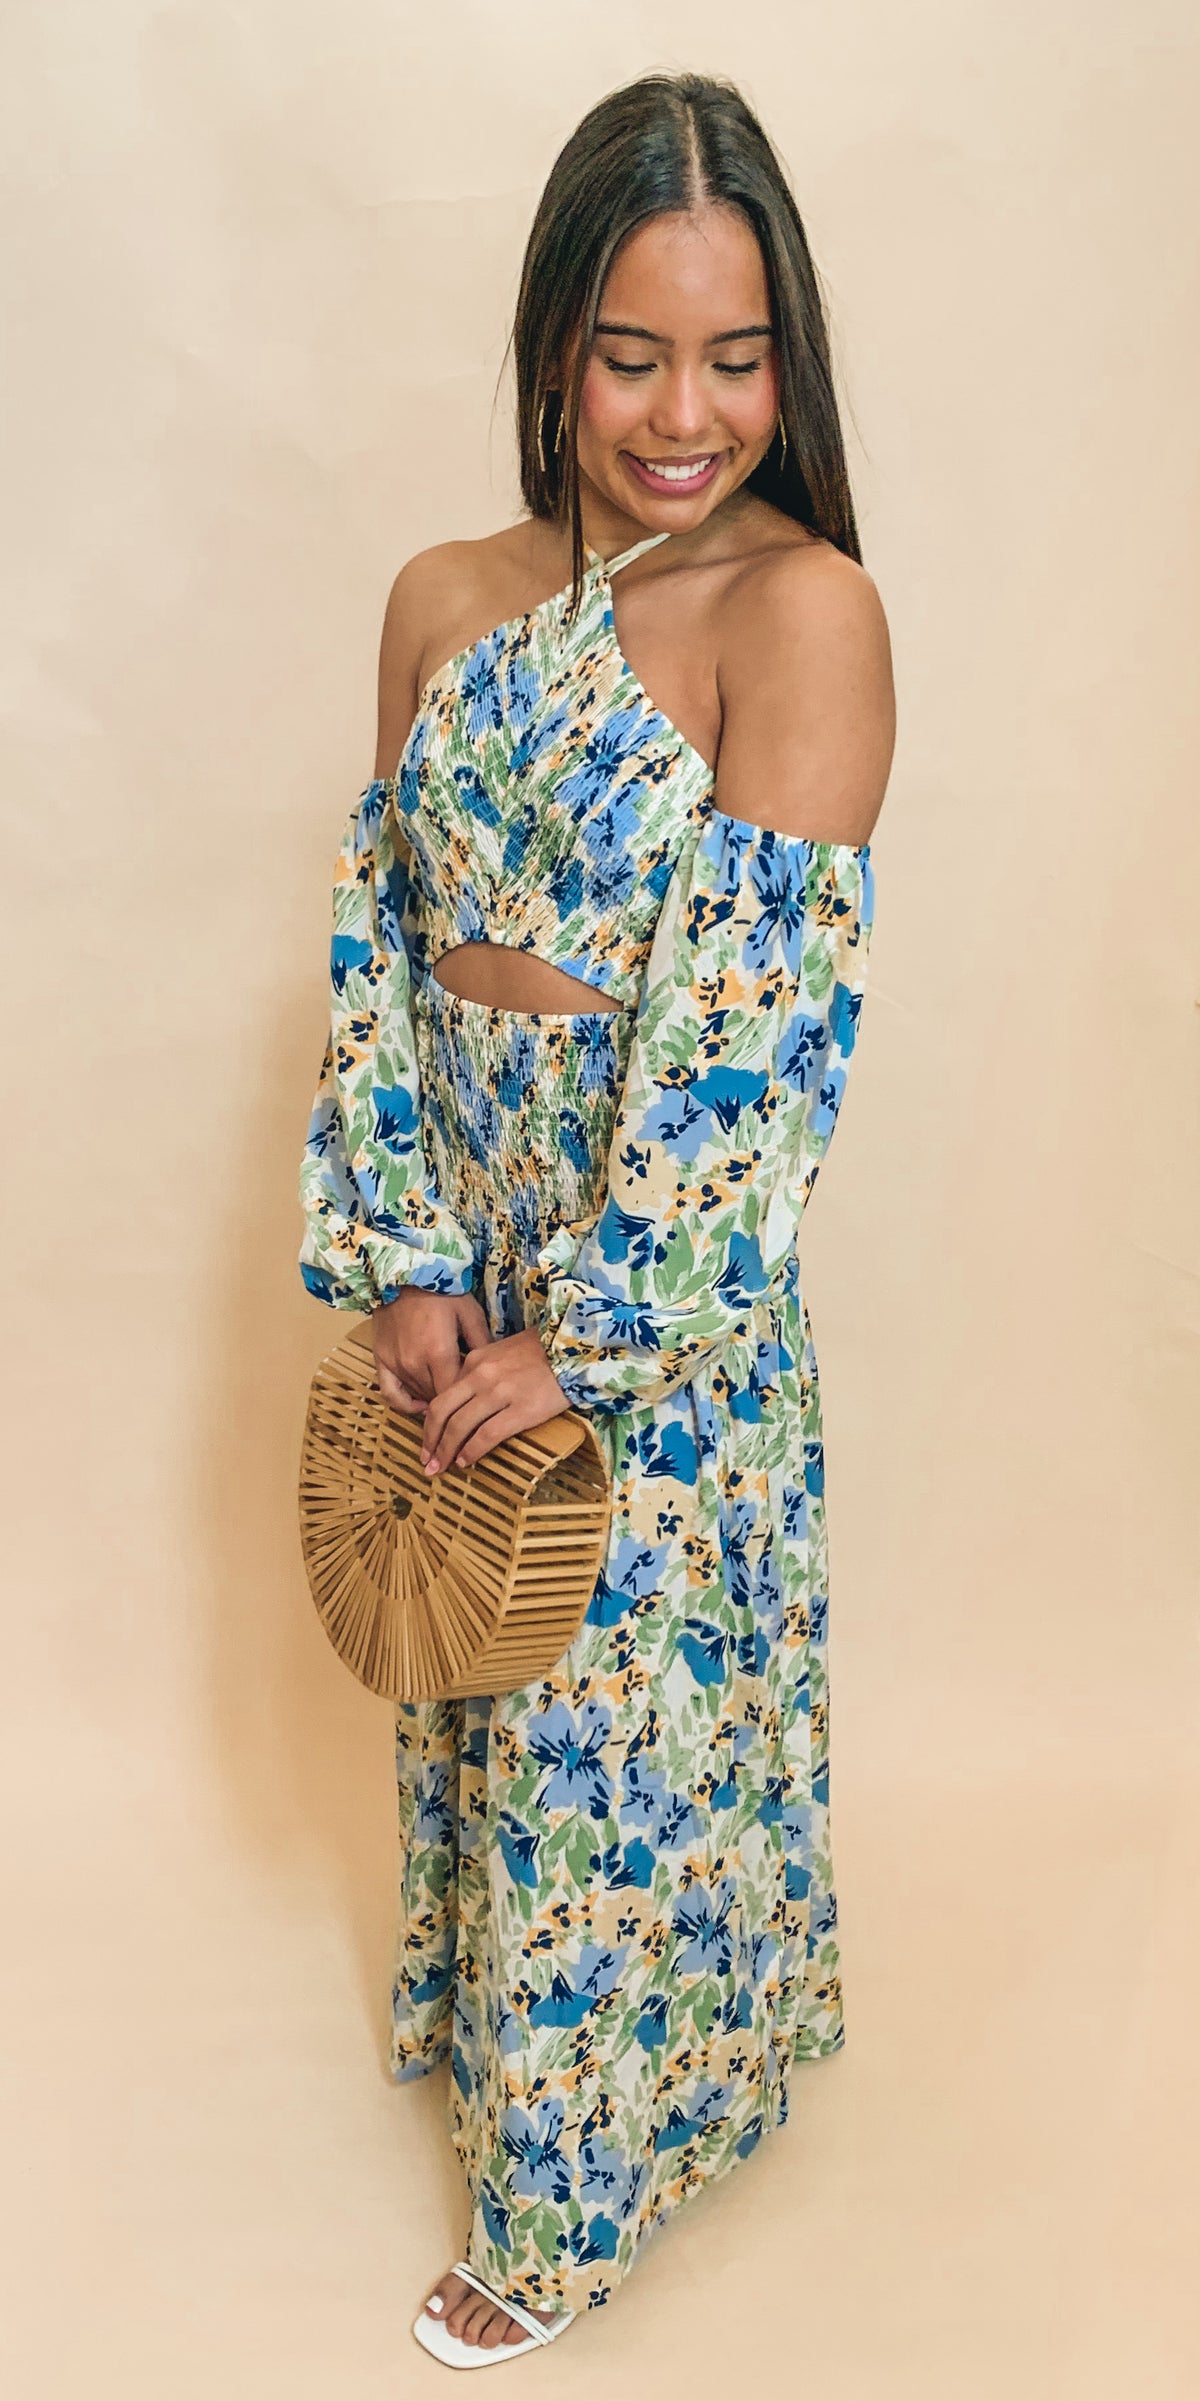 Best seller! Floral cold-shoulder cutout maxi dress